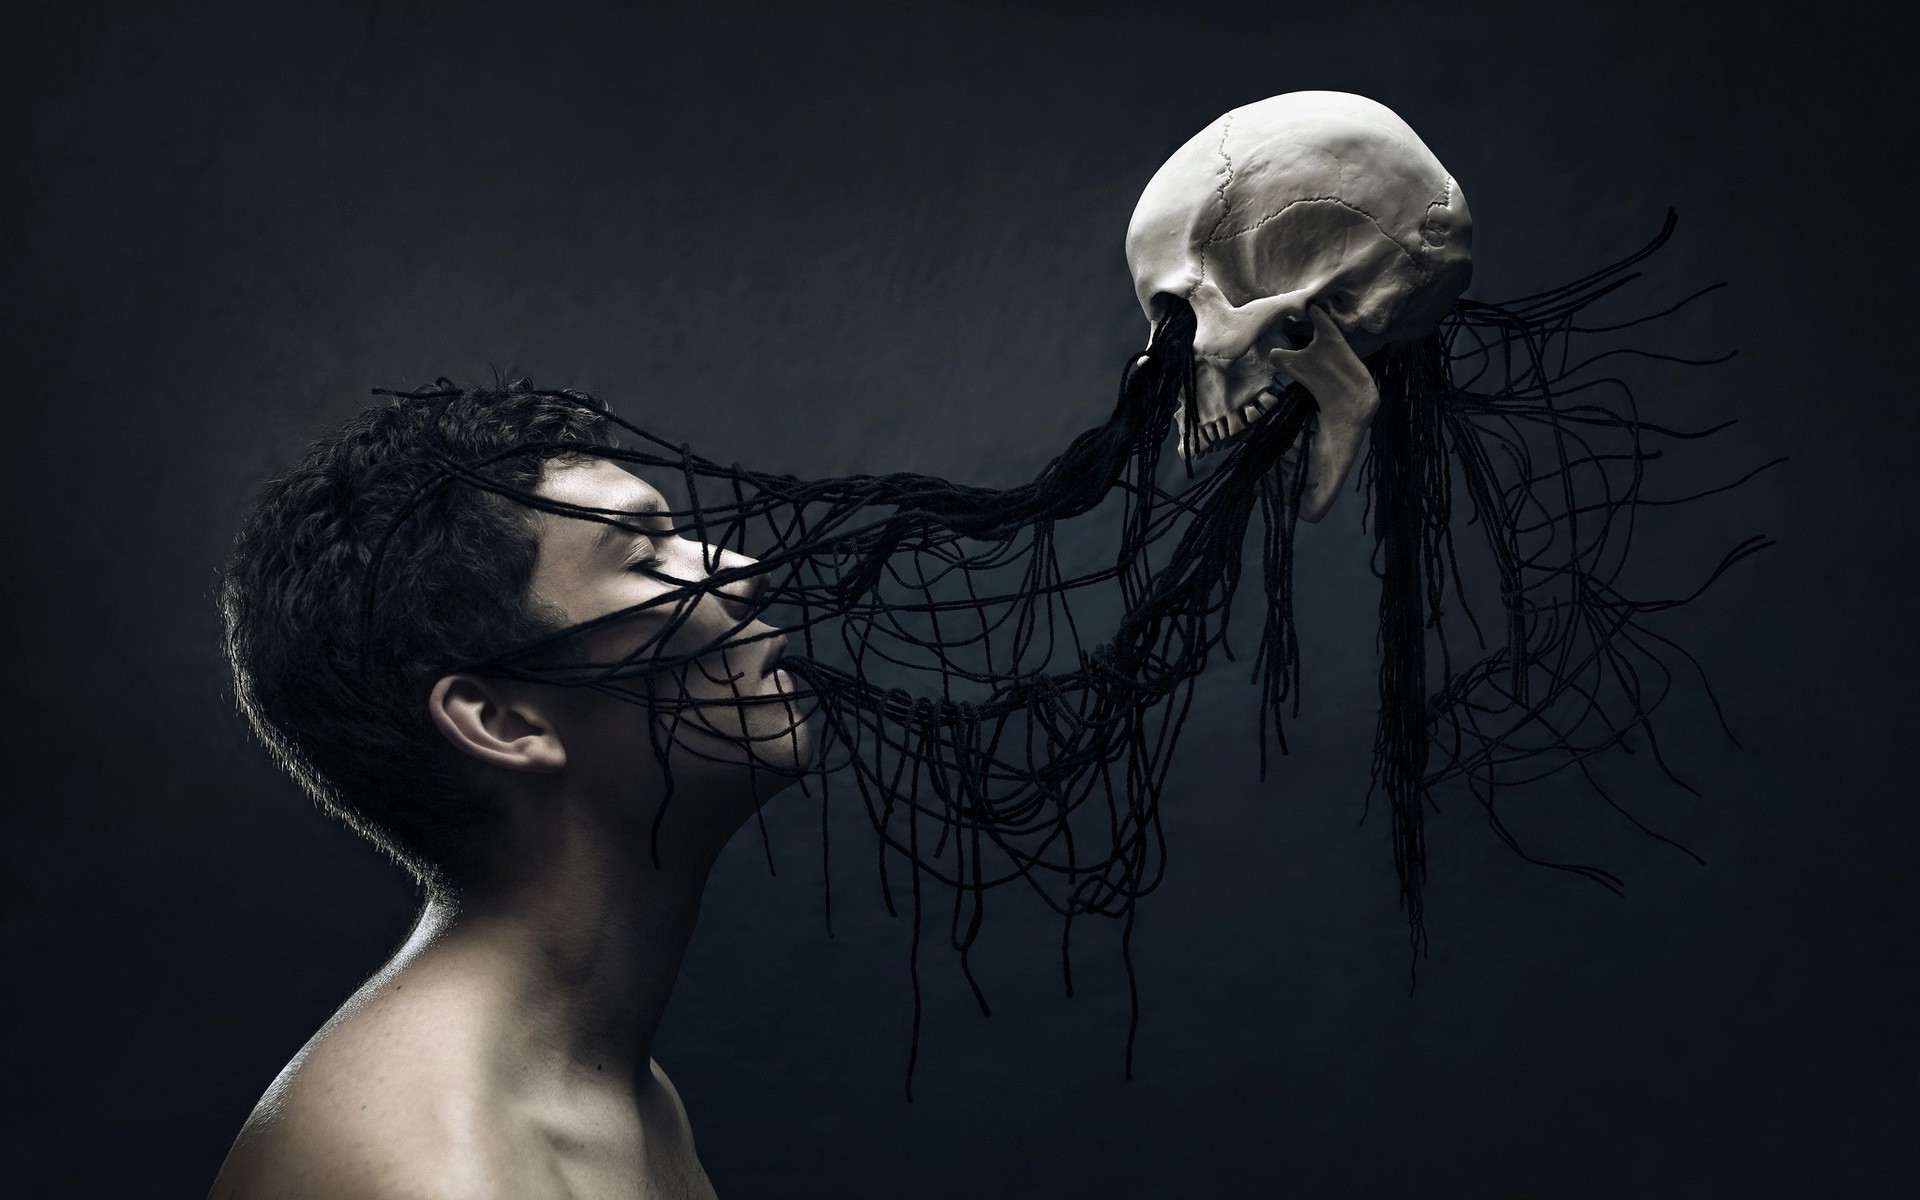 https://wallup.net/wp-content/uploads/2016/04/10/271361-men-digital_art-fantasy_art-skull-death-spooky-Gothic.jpg